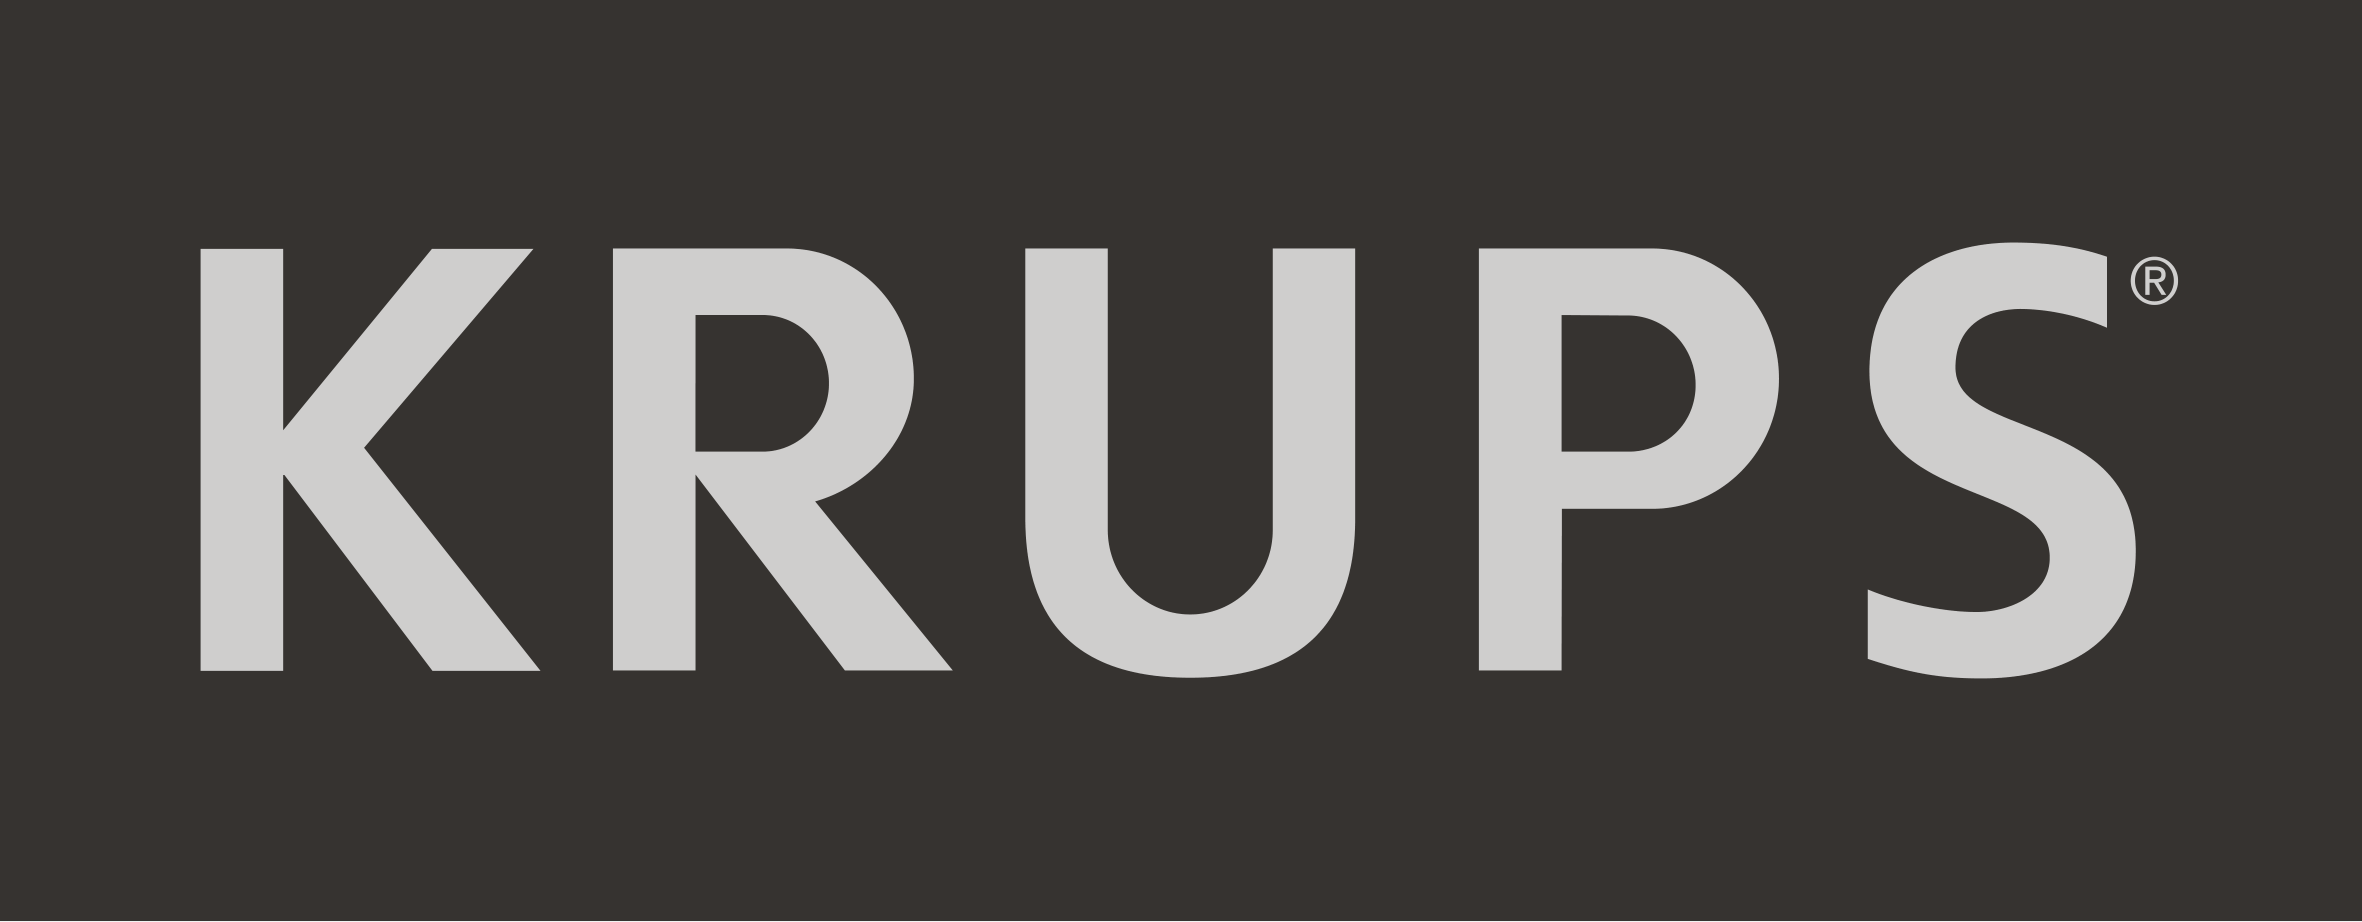 krups logo